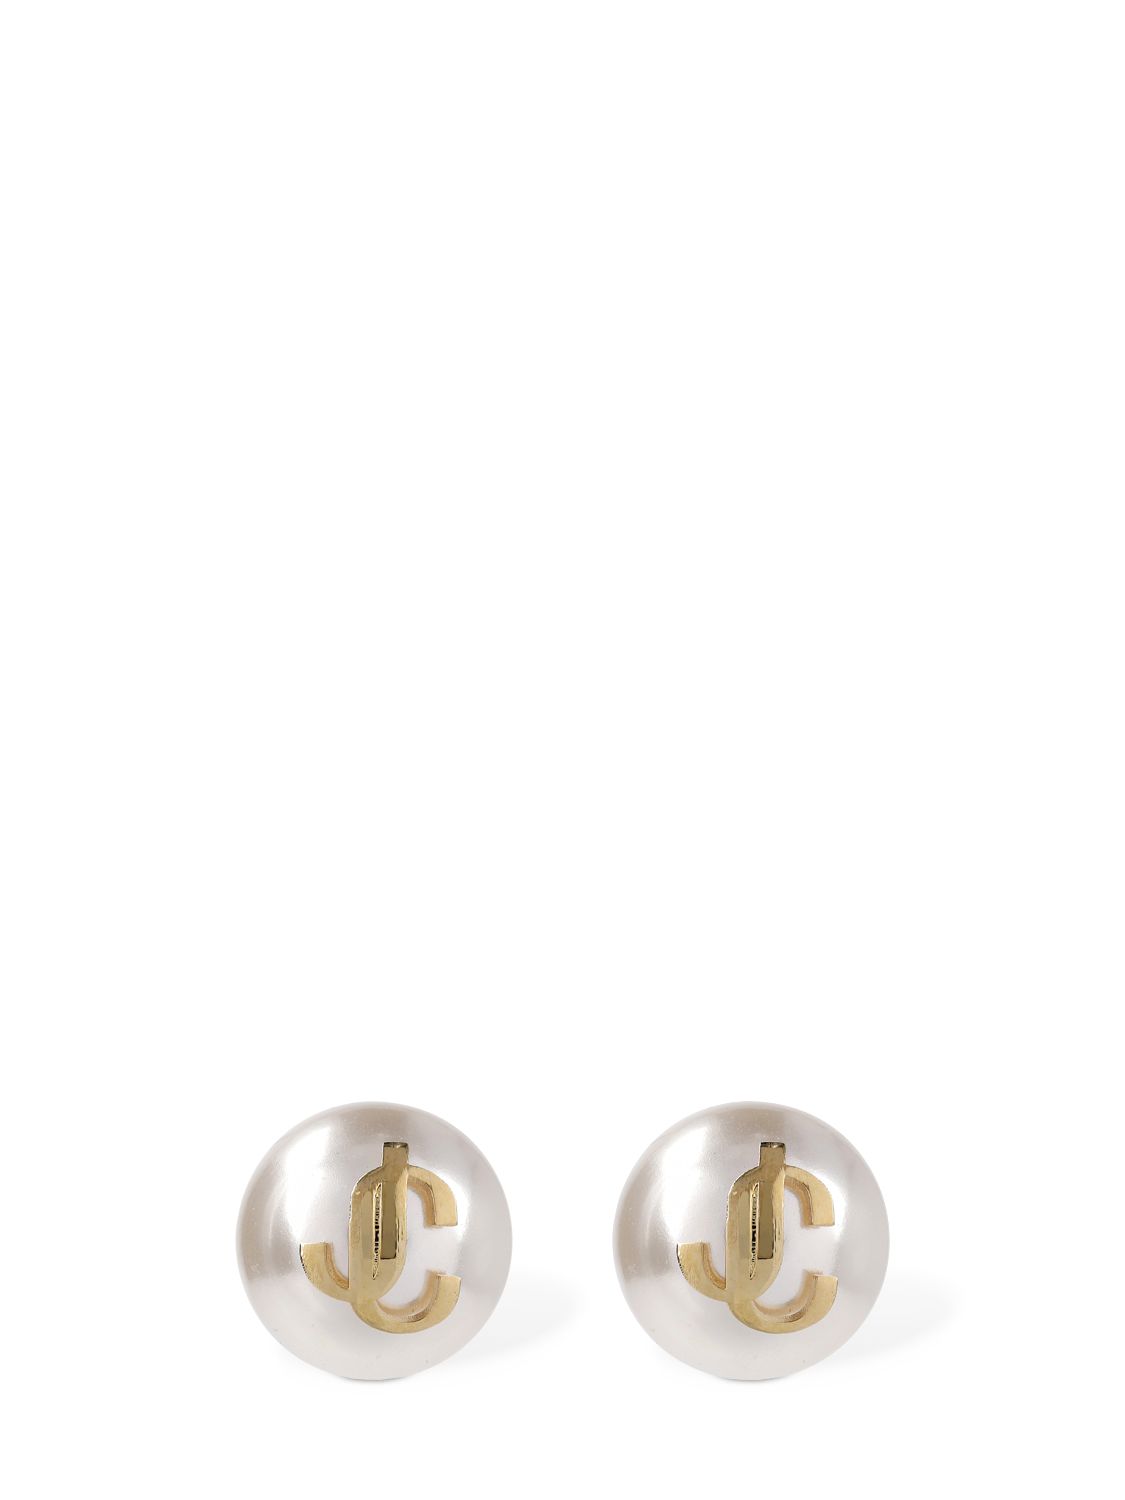 Jc Imitation Pearl Stud Earrings